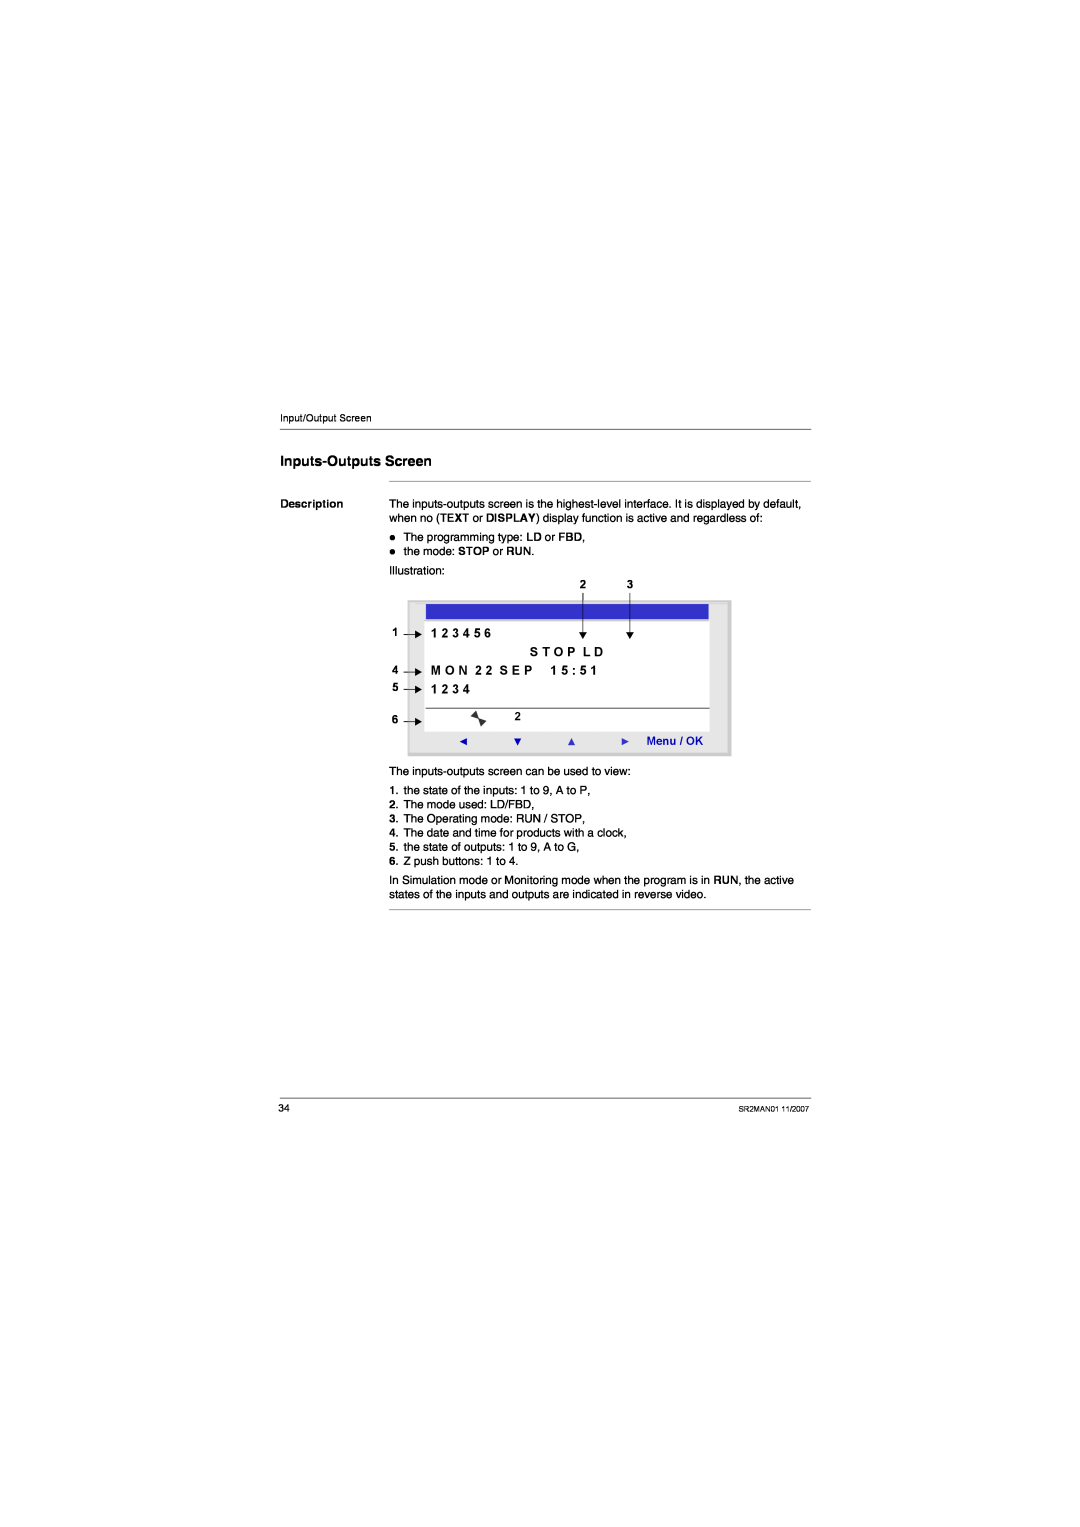 Schneider Electric SR2MAN01 user manual Inputs-Outputs Screen, Description, Menu / OK 